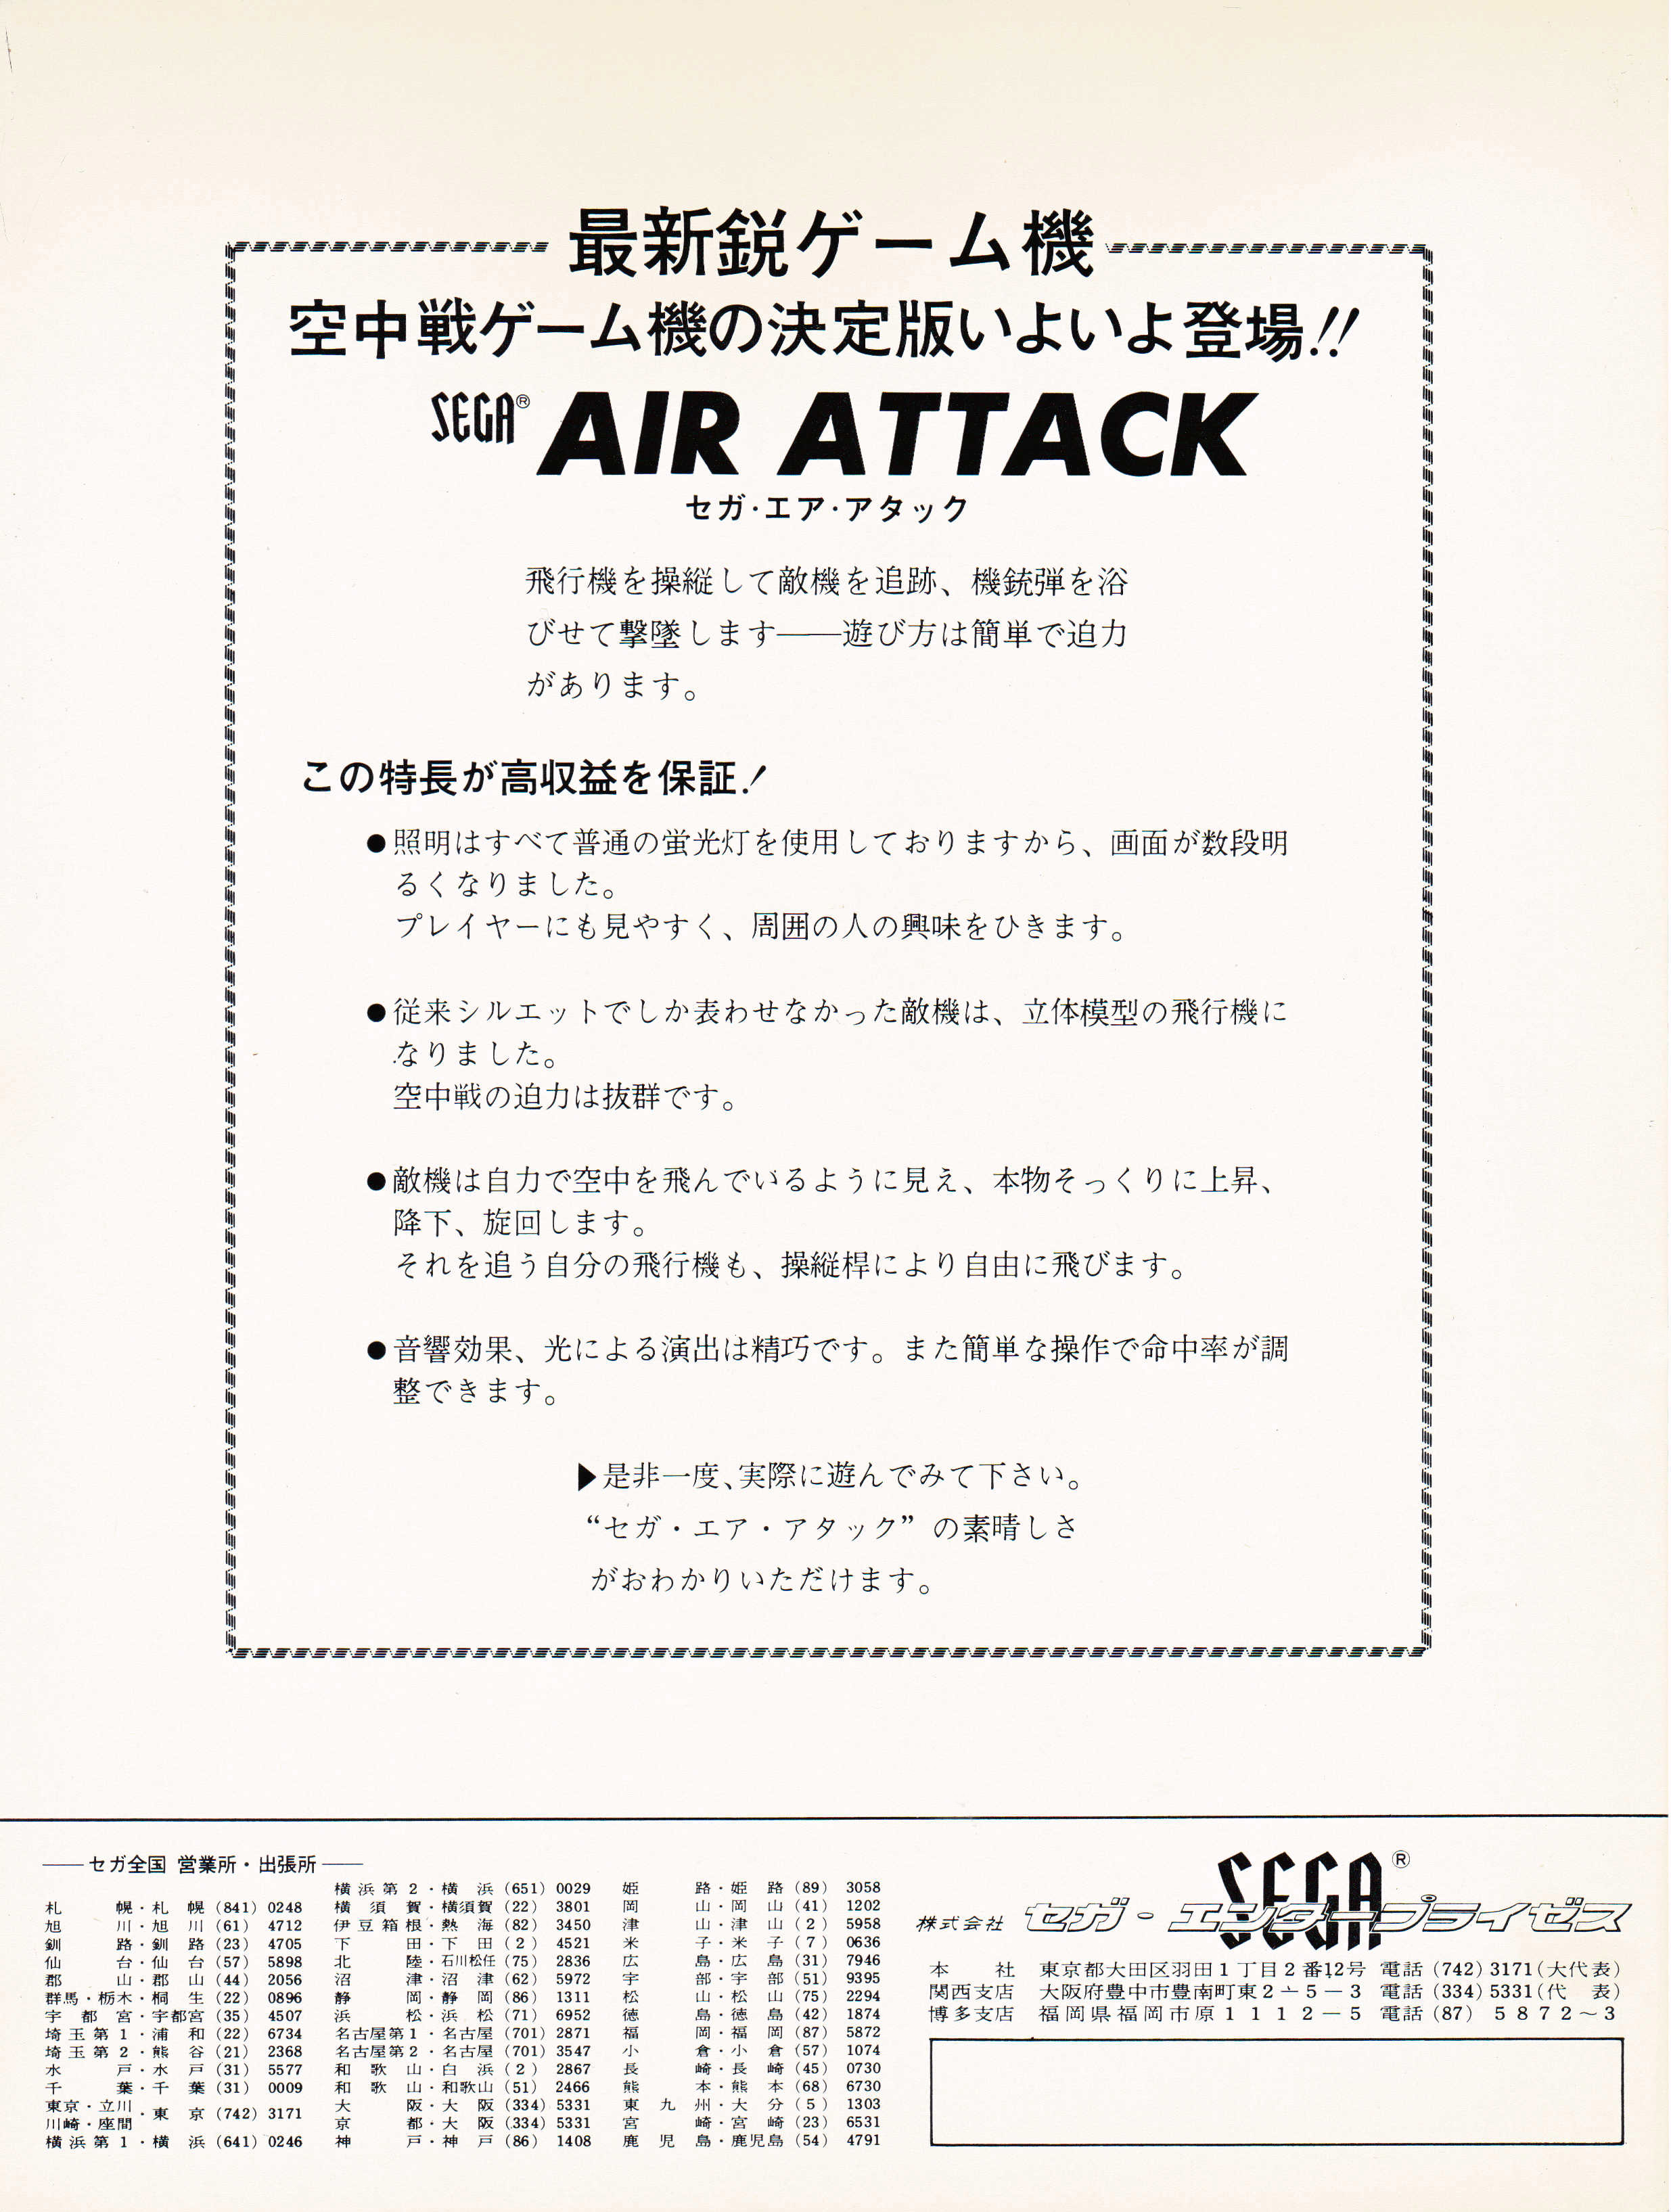 Airattack flyer3.jpg